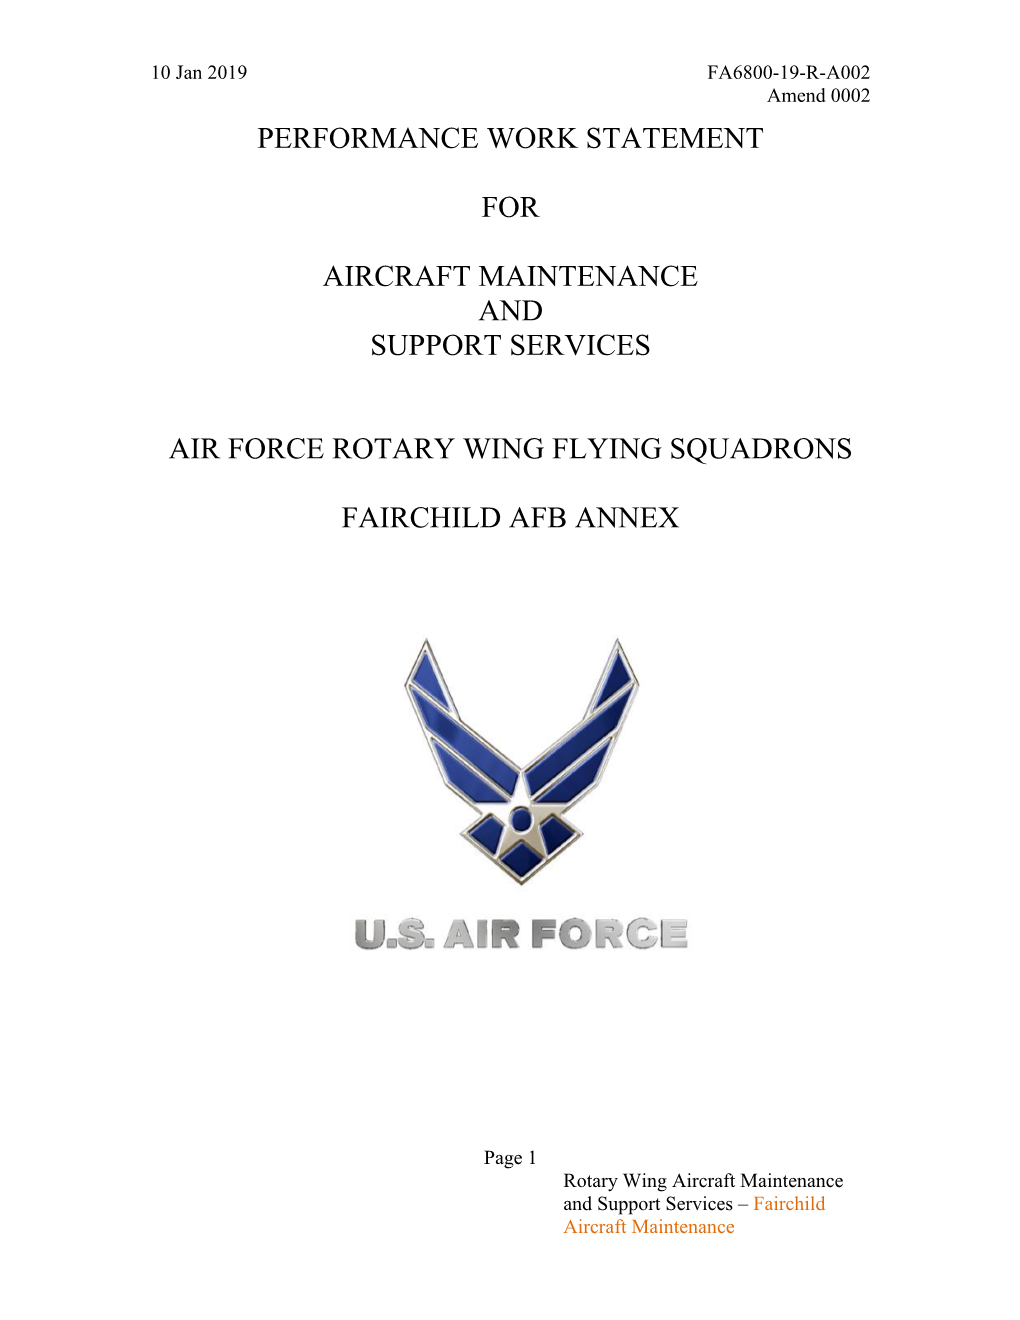 Performance Work Statement for Aircraft Maintenance